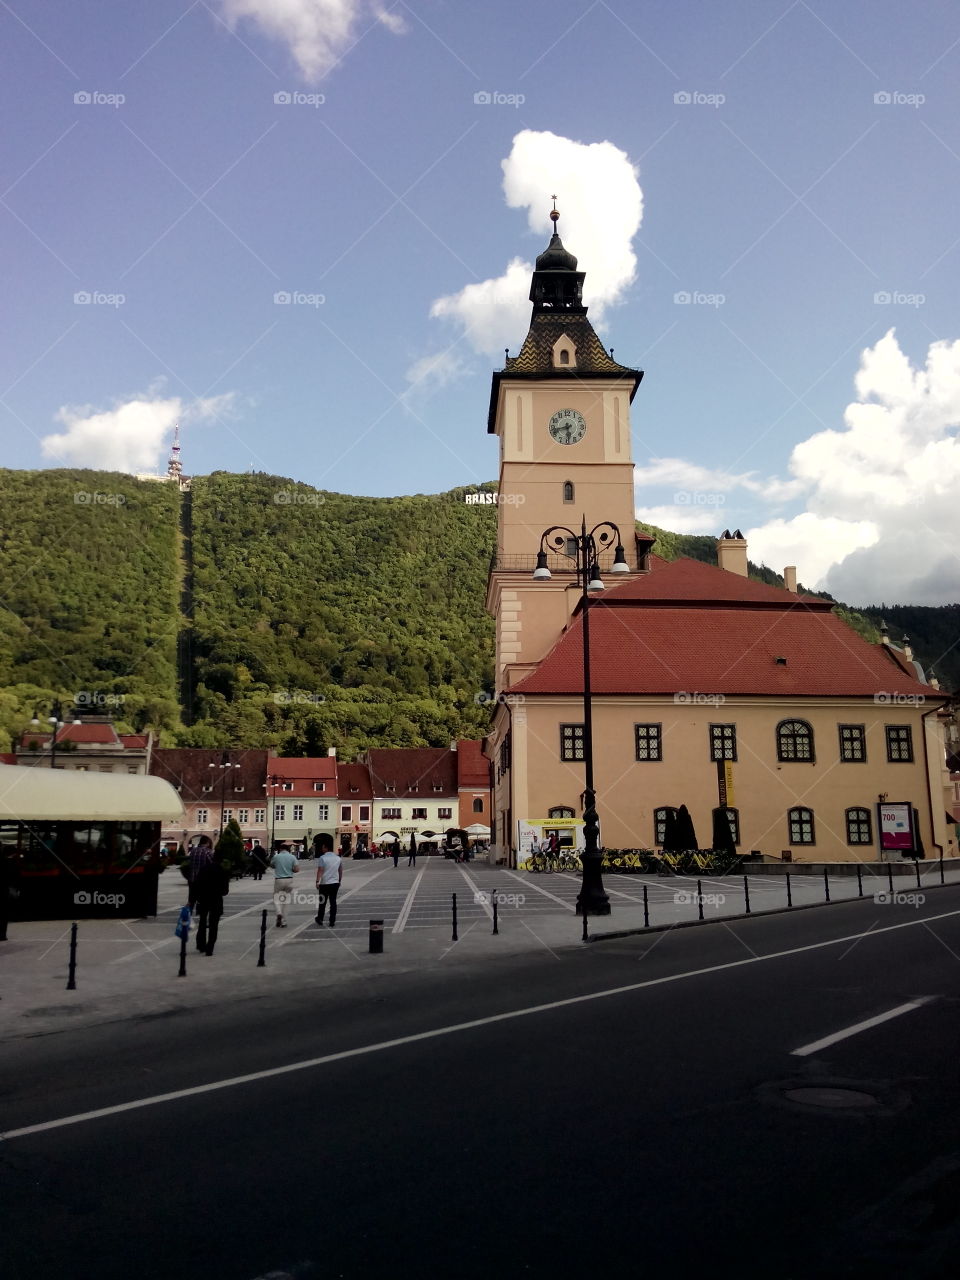 A glimpse of Brașov